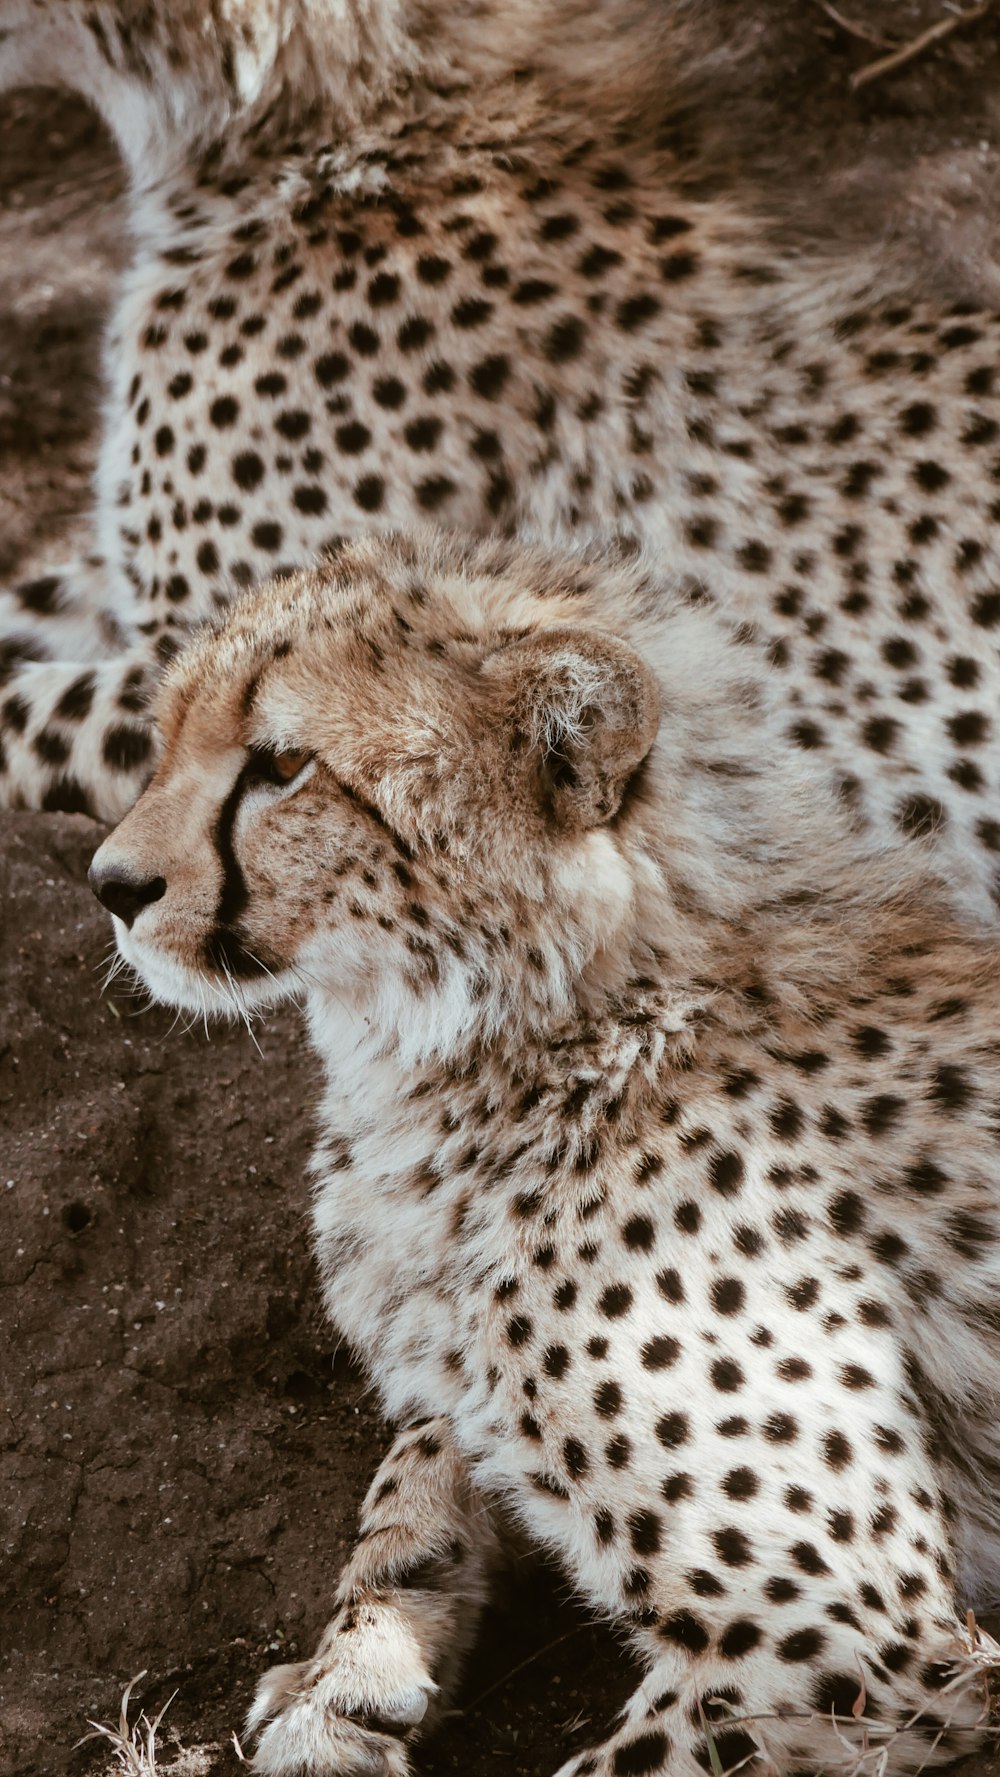 cheetah cub beside adult cheetah